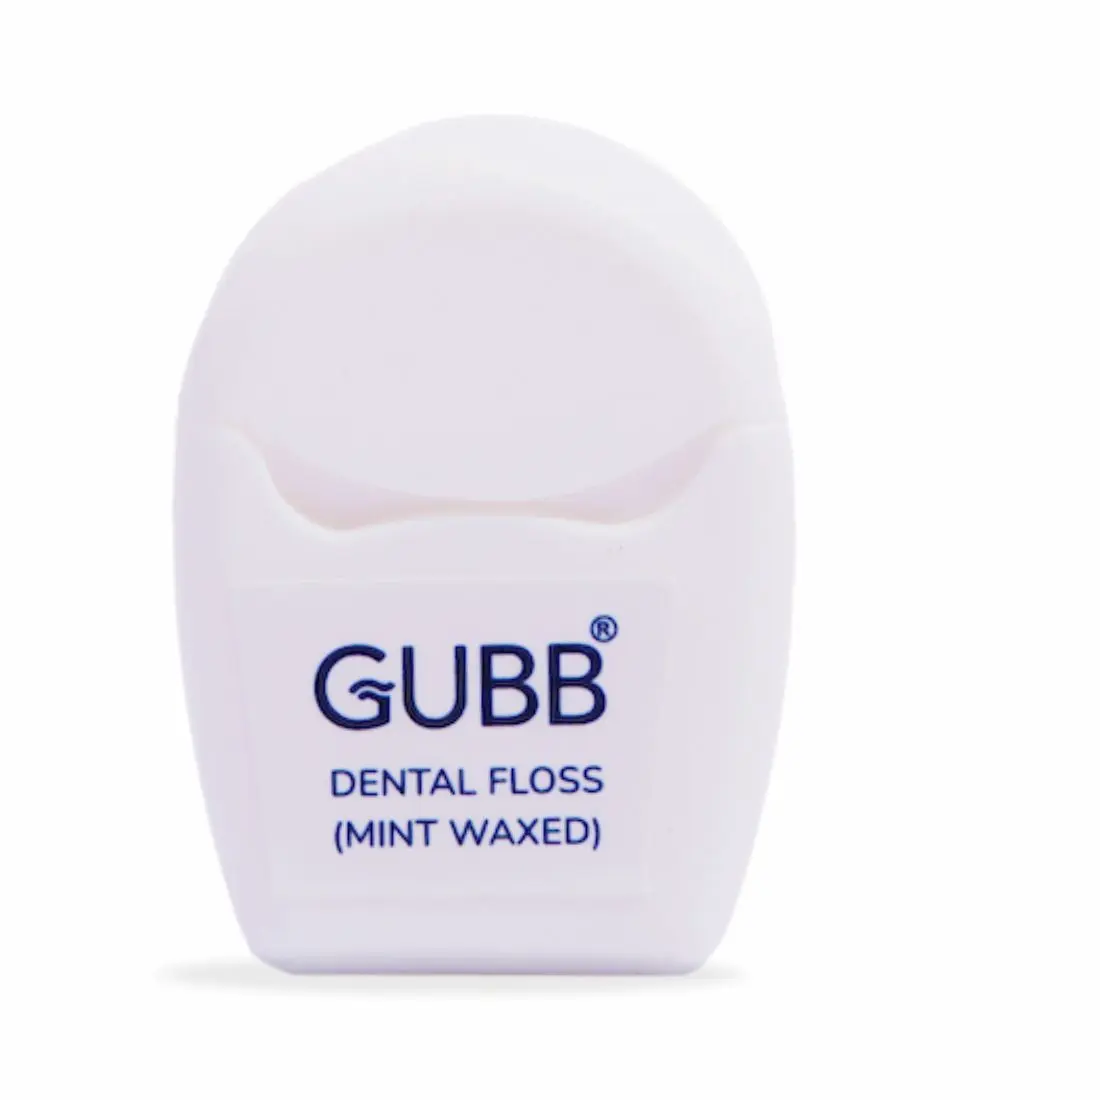 GUBB Dental Floss Thread For Teeth, Mint Waxed - 10M